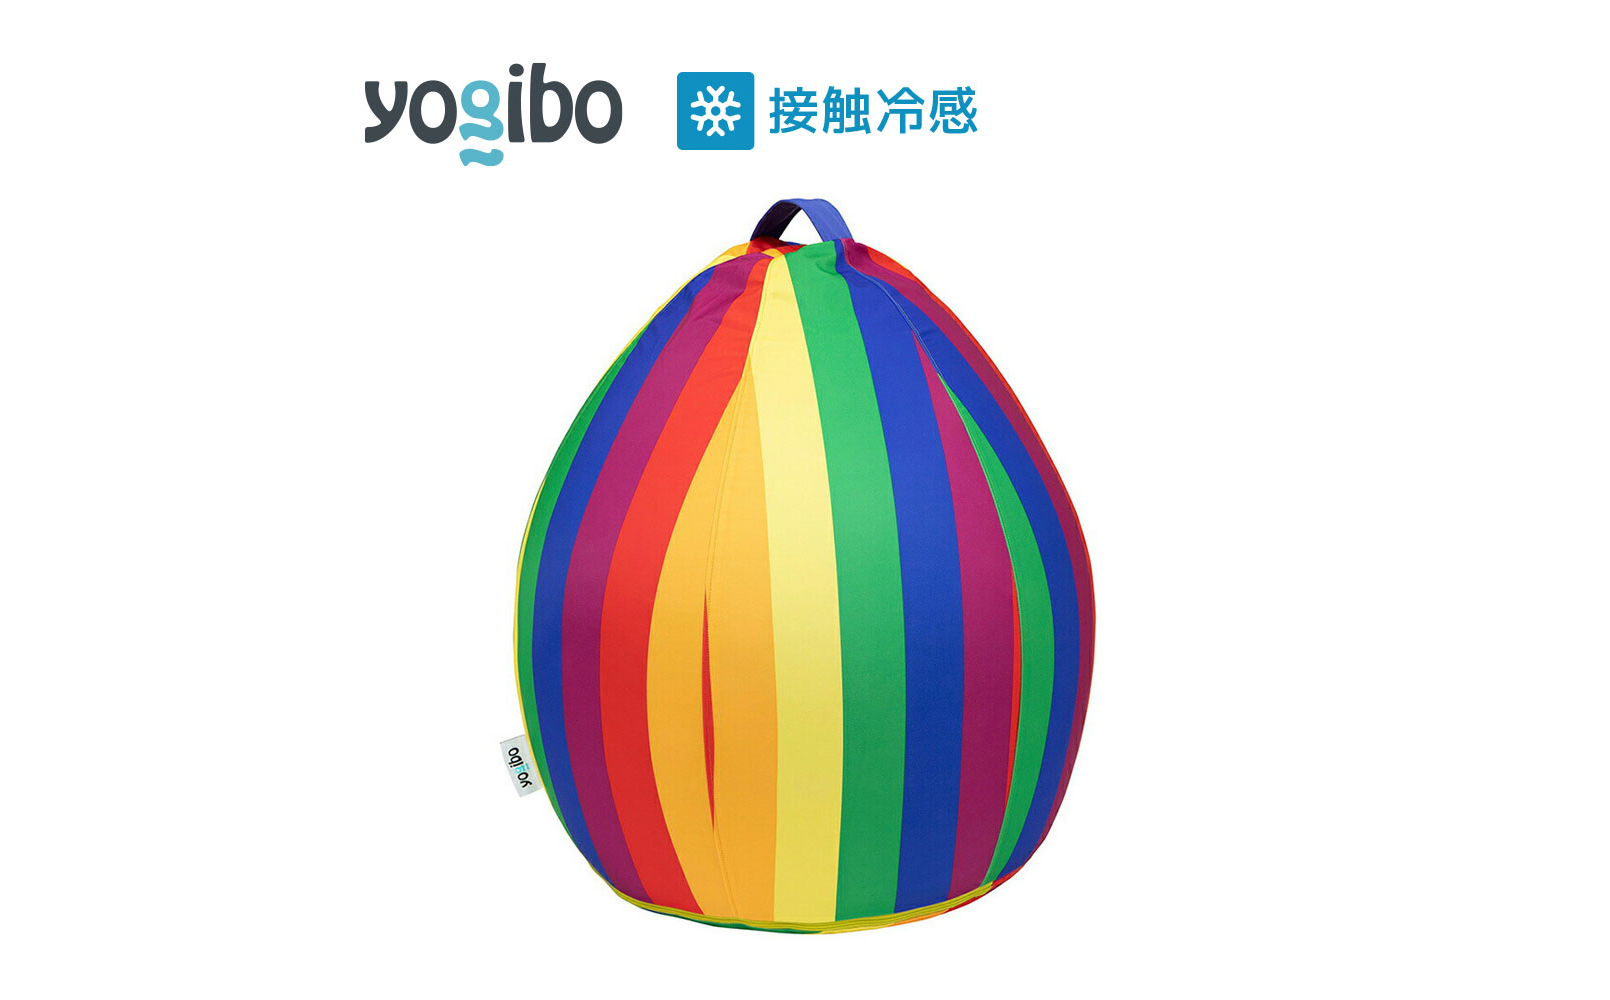 【Pride Edition】 Yogibo Zoola Drop  (ヨギボー ズーラ ドロップ)